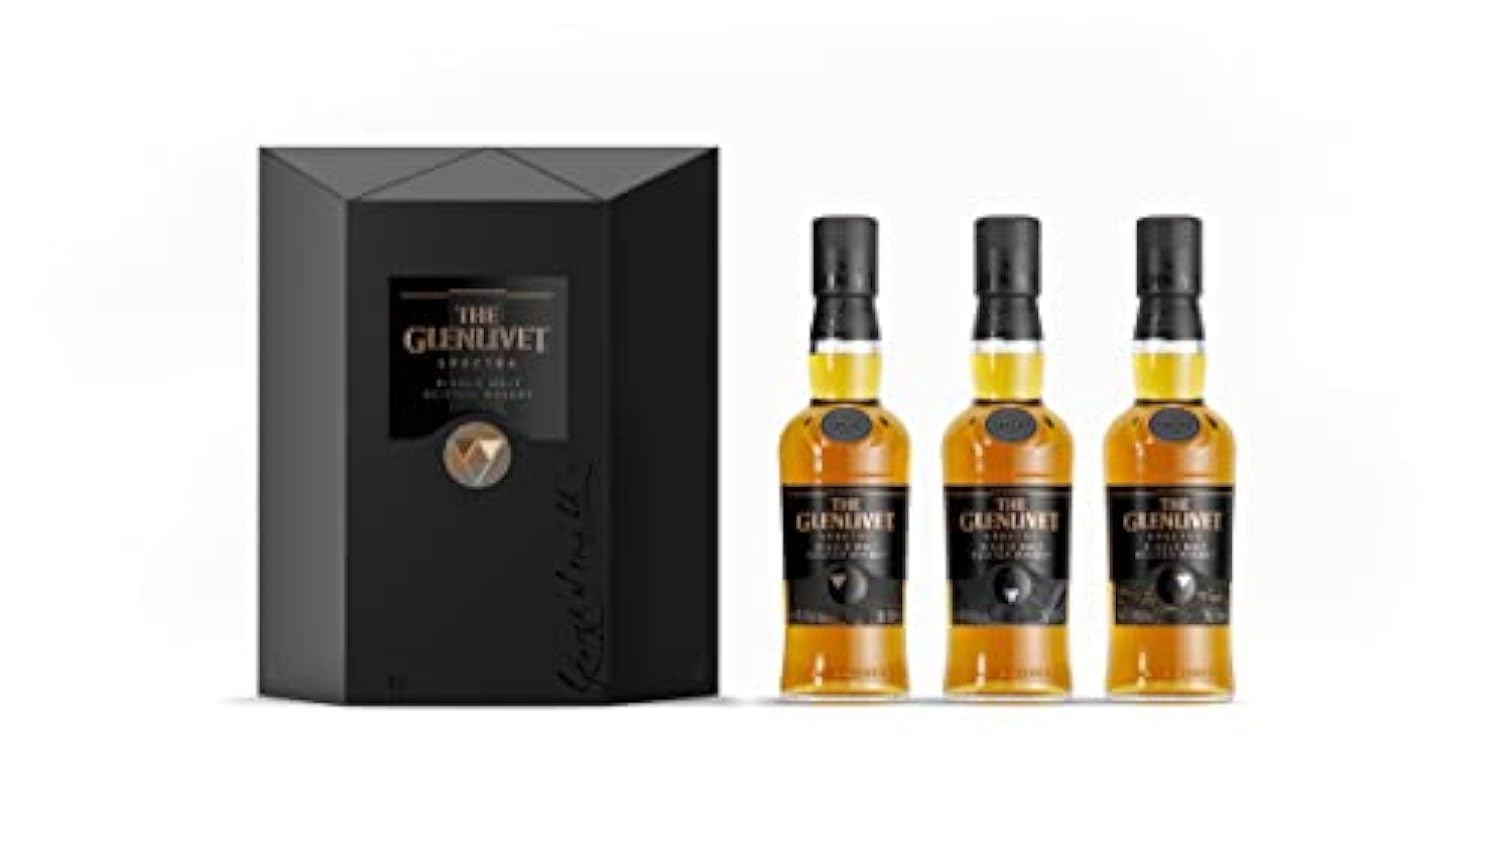 The Glenlivet SPECTRA Single Malt Scotch Whisky 40% Vol. 3x0,2l in Giftbox jGgoTS2i